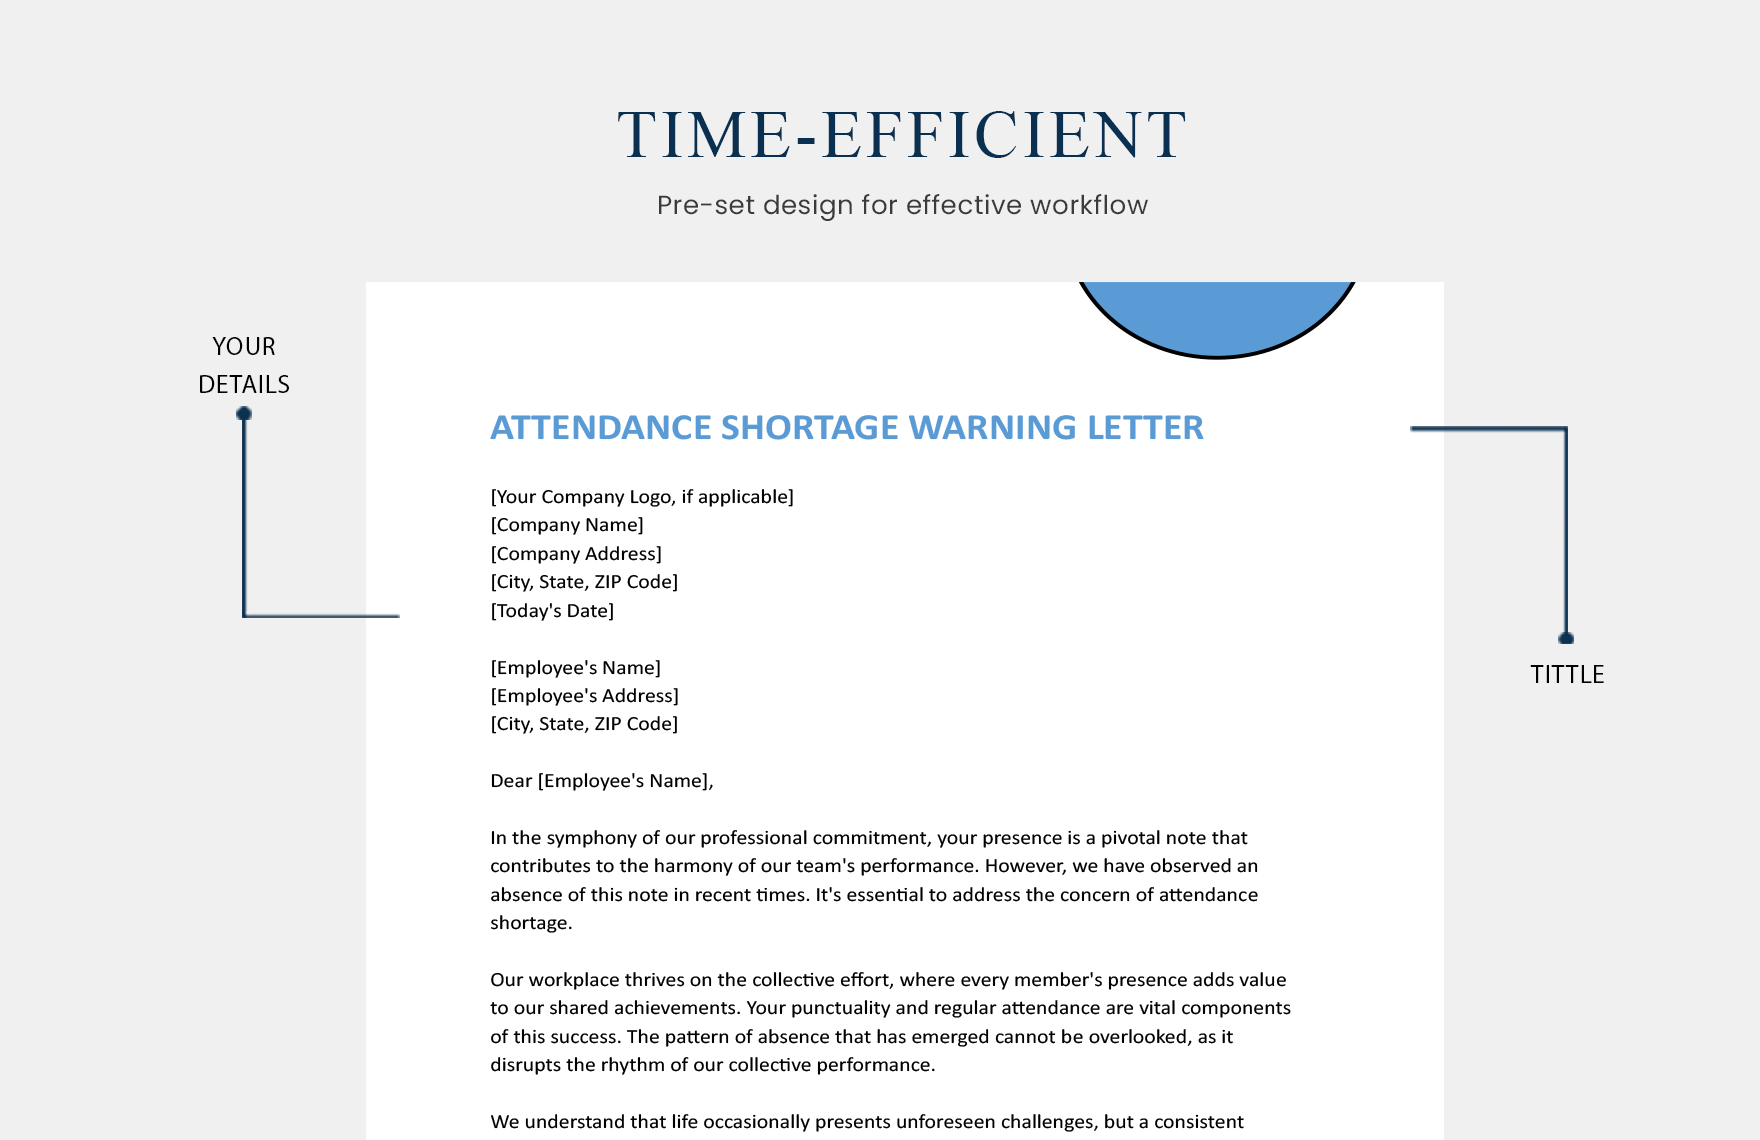 Attendance Shortage Warning Letter